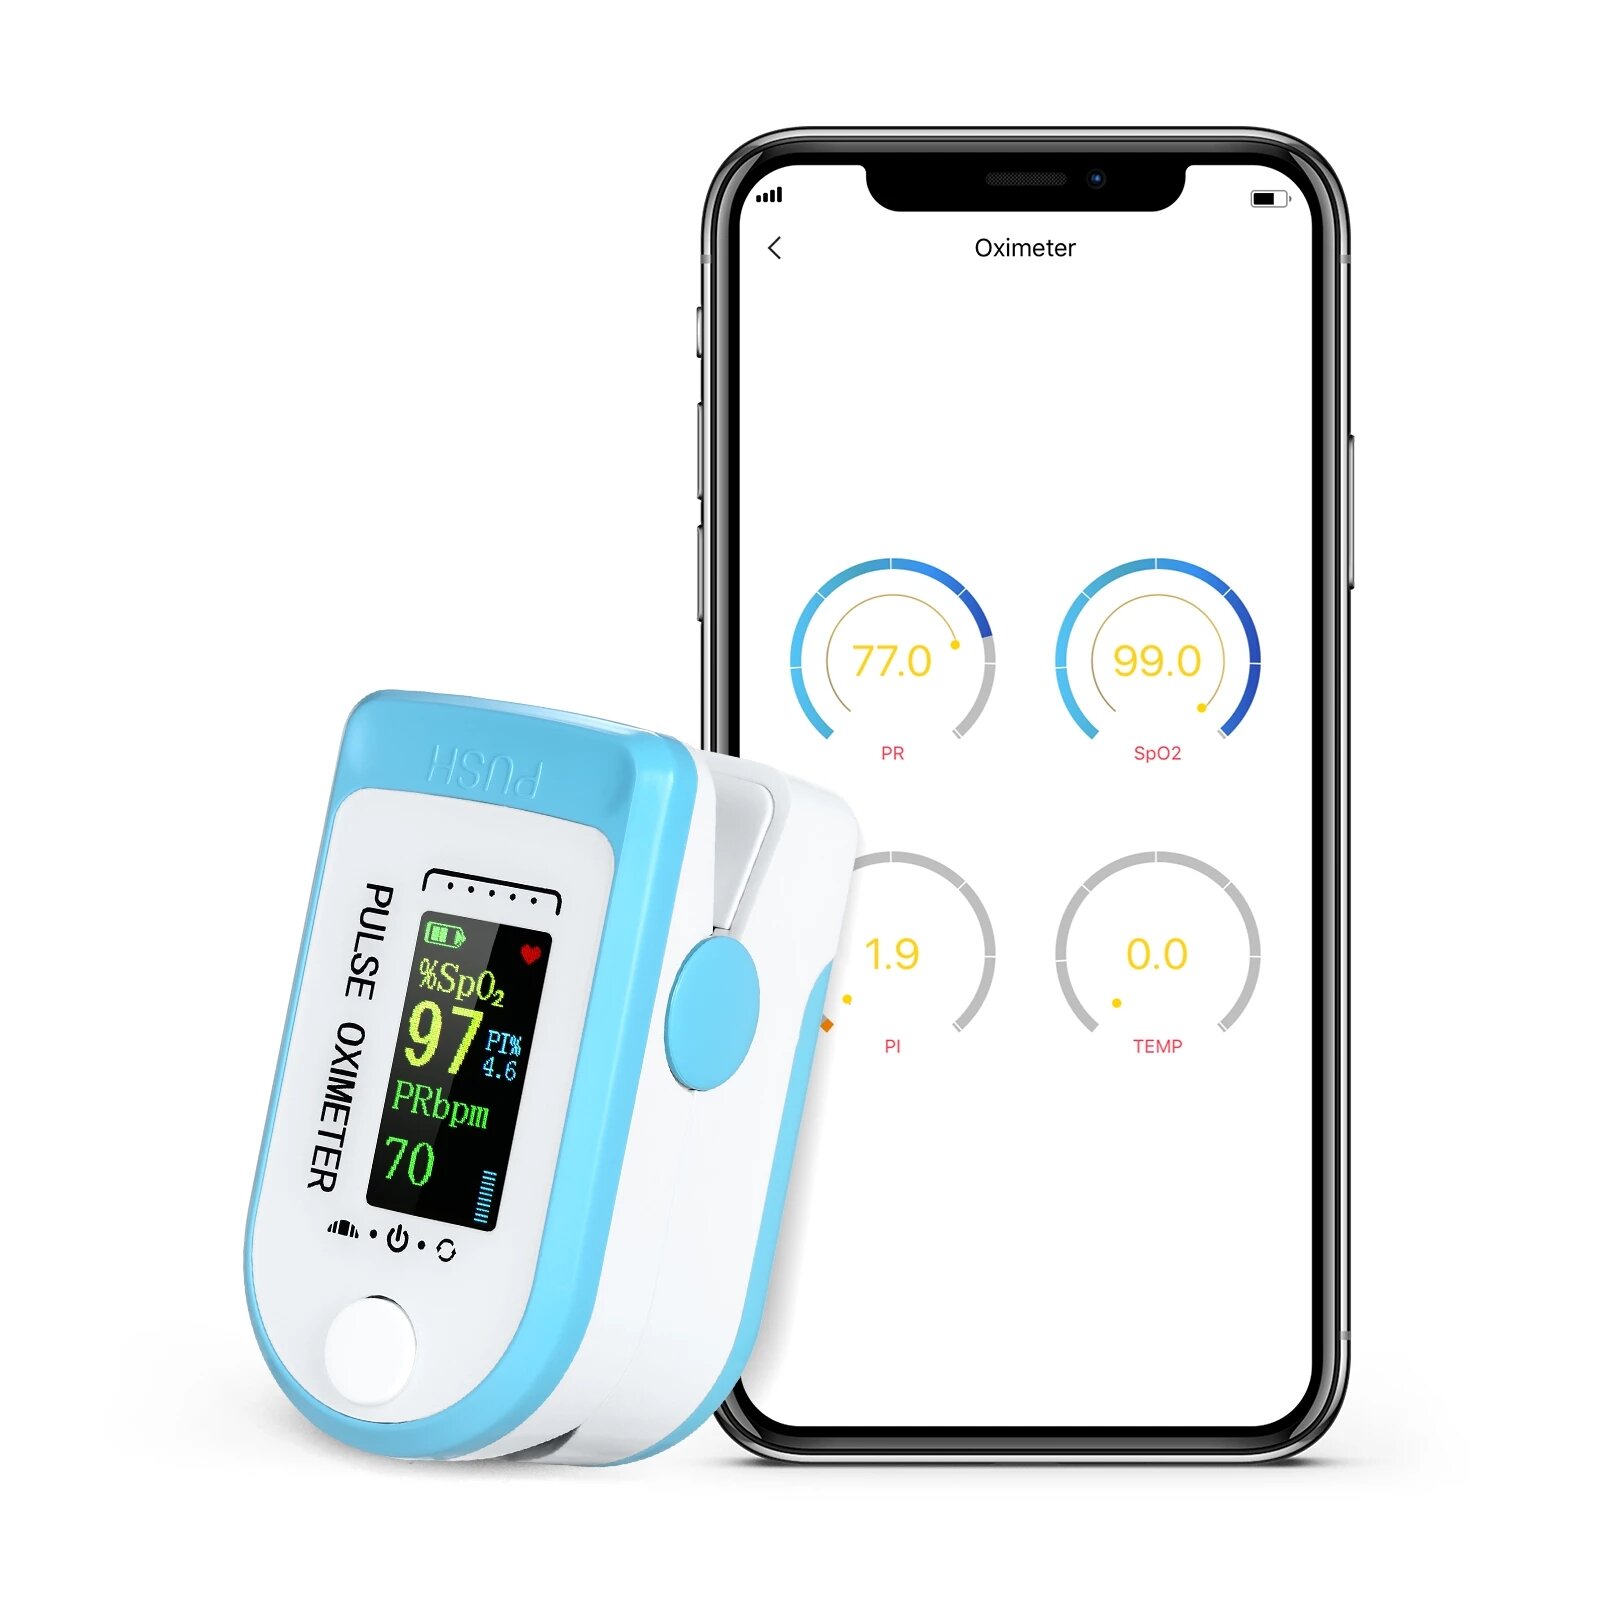 

Bluetooth Fingertip Pulse Oximetro SpO2 PR PI Oximeter De Dedo Android IOS APP Насыщение крови кислородом Сердце Оксимет